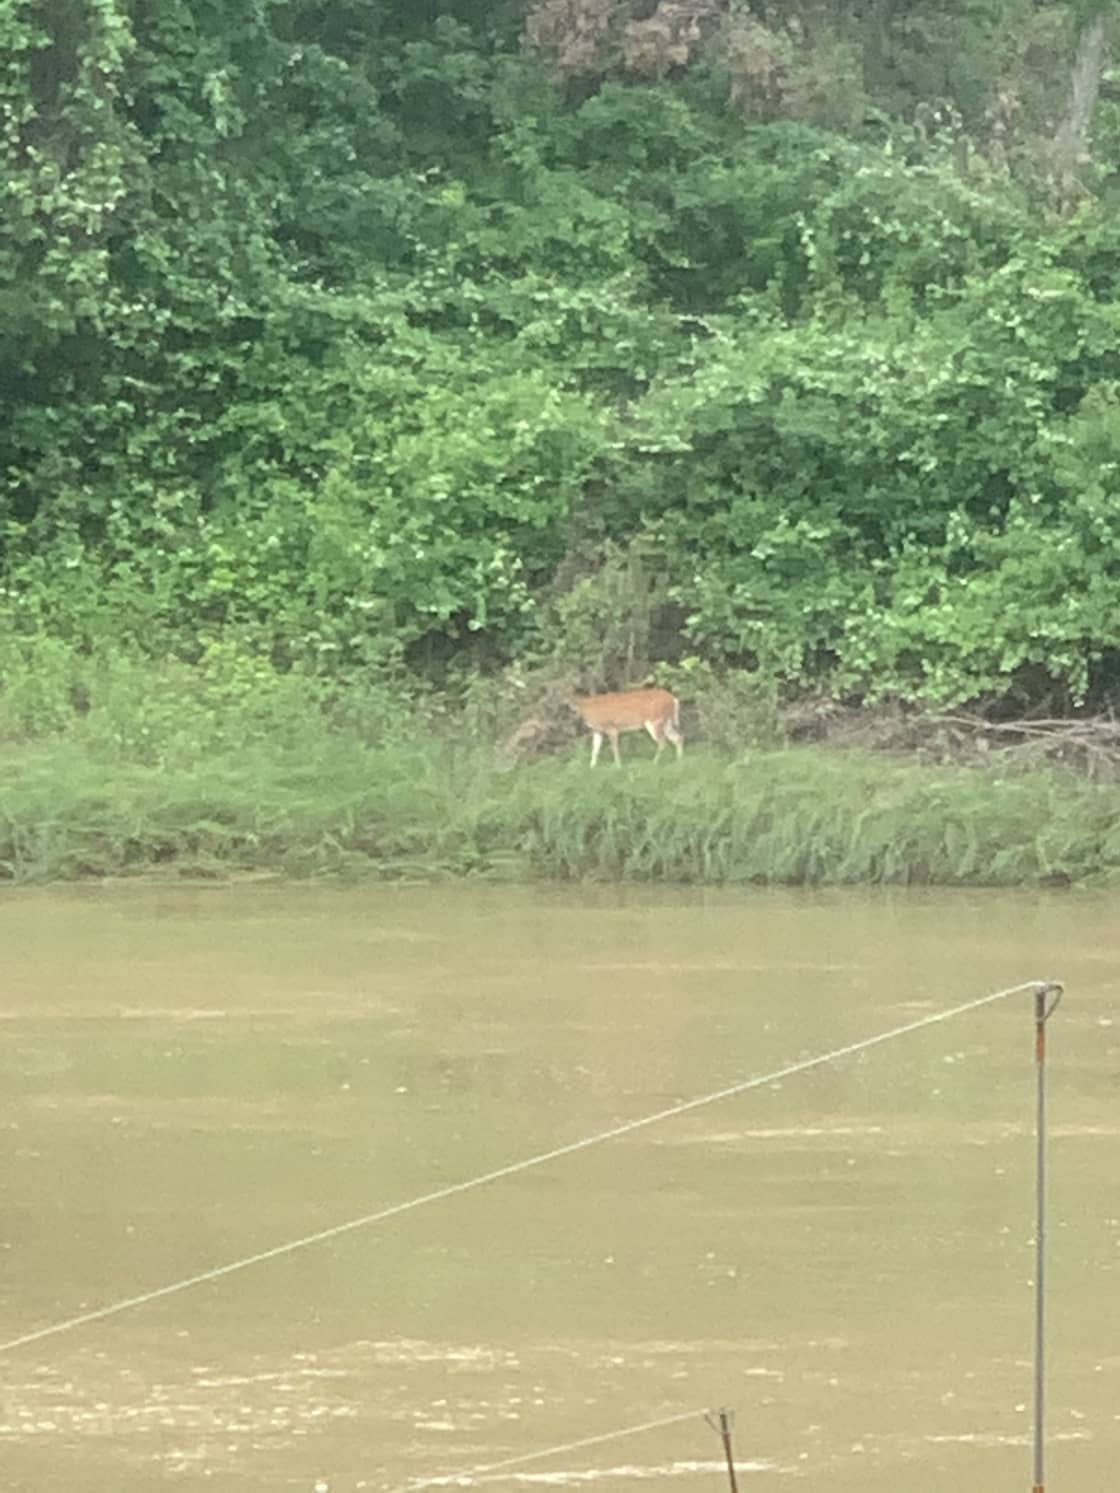 Deer sighting while fishing.